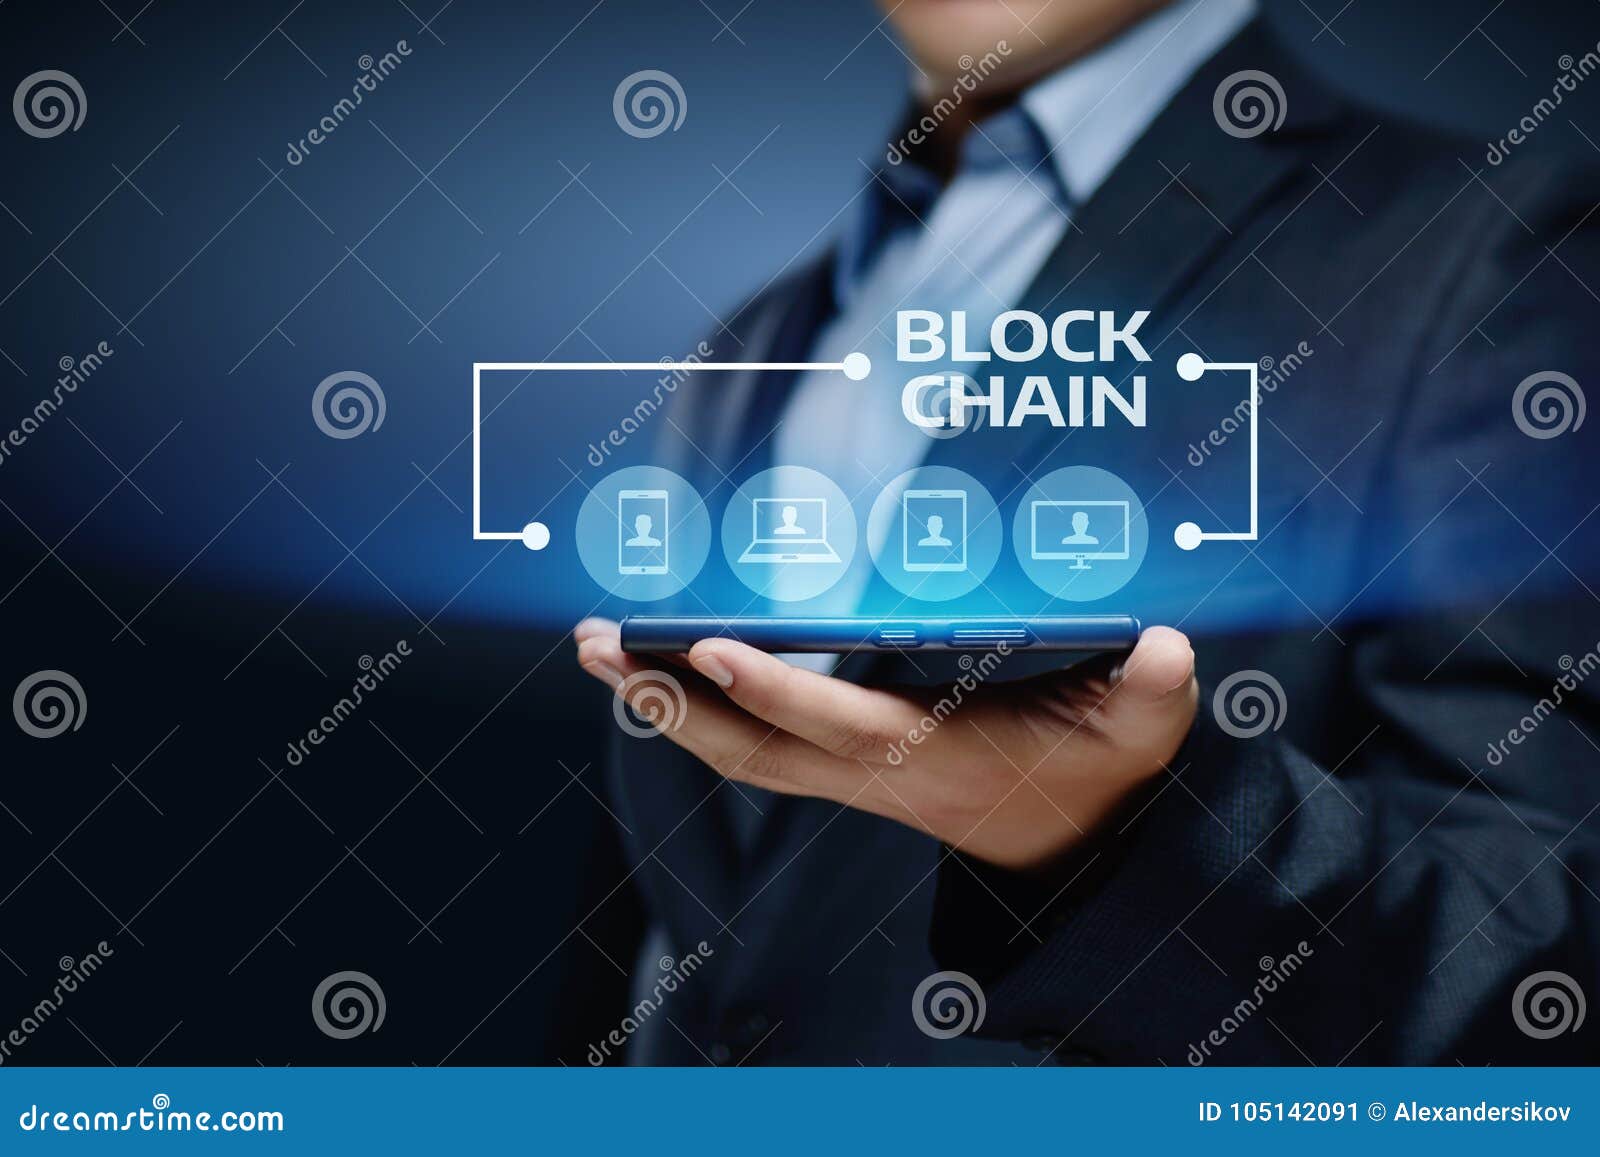 block chain business internet network concept. ledger technology